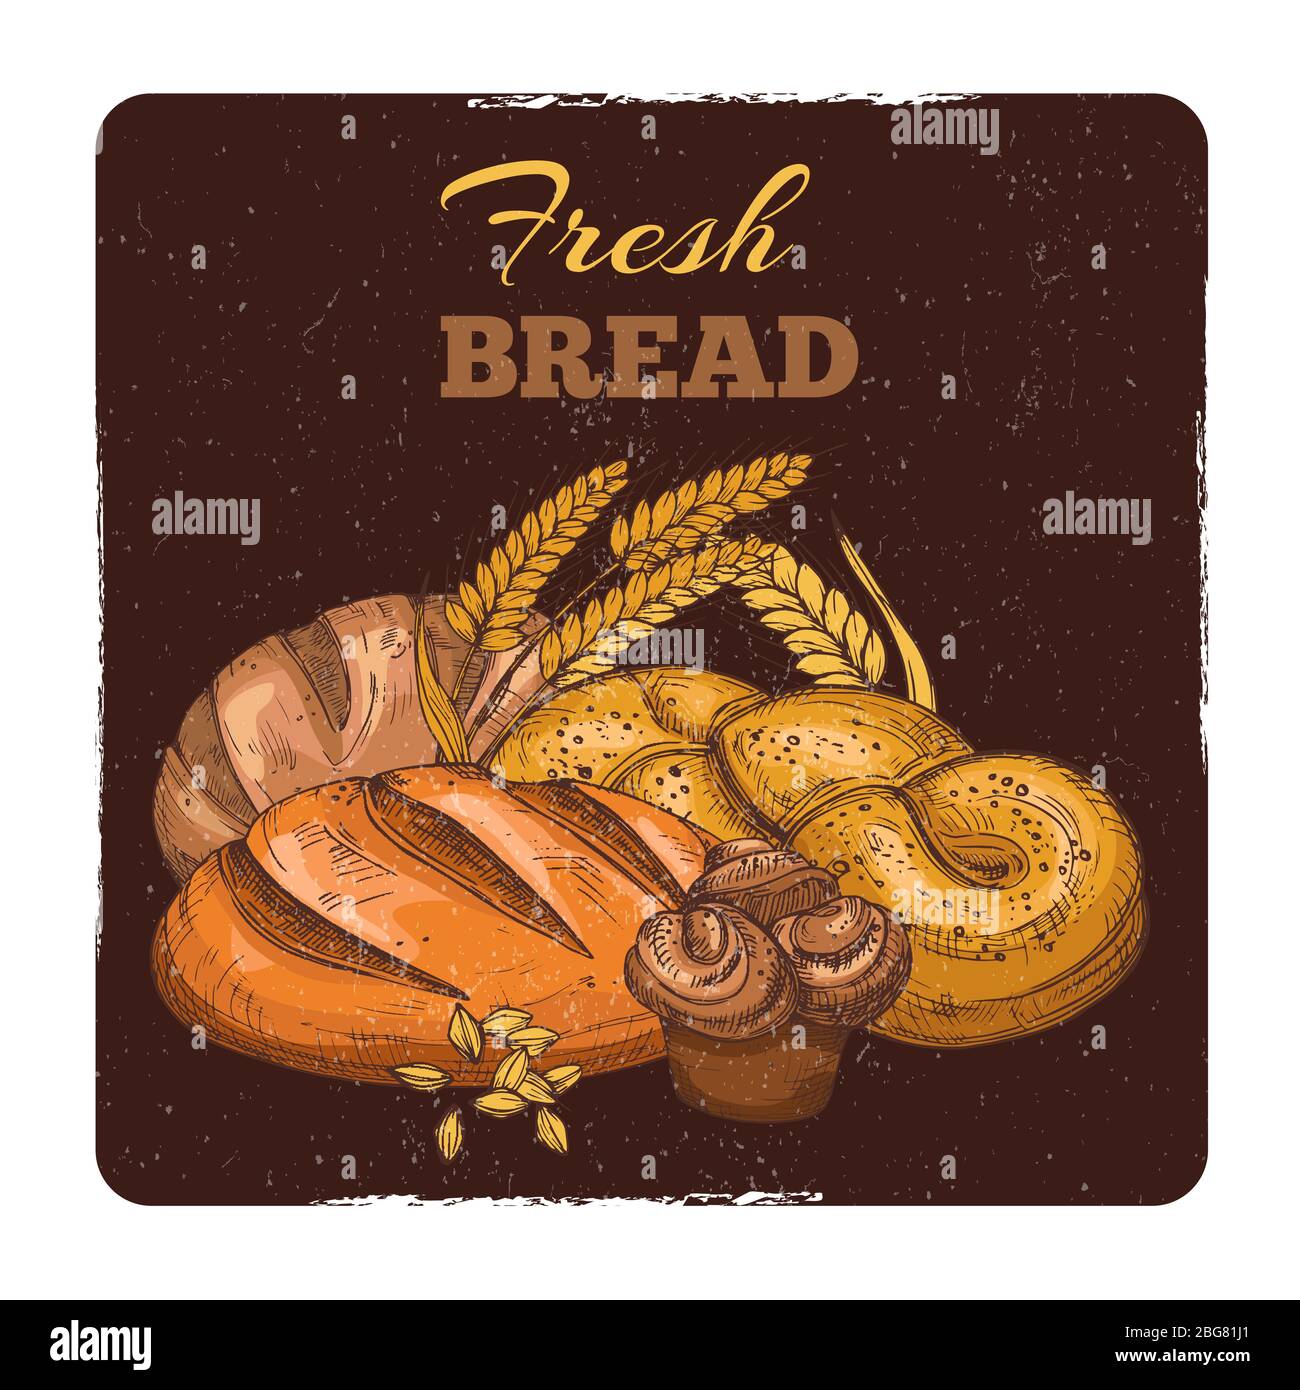 Emblem für Bäcker. Hand skizziert frisches Brot Vektor-Konzept. Brot Backwaren Lebensmittel, Skizze Emblem Banner für Shop-Illustration Stock Vektor